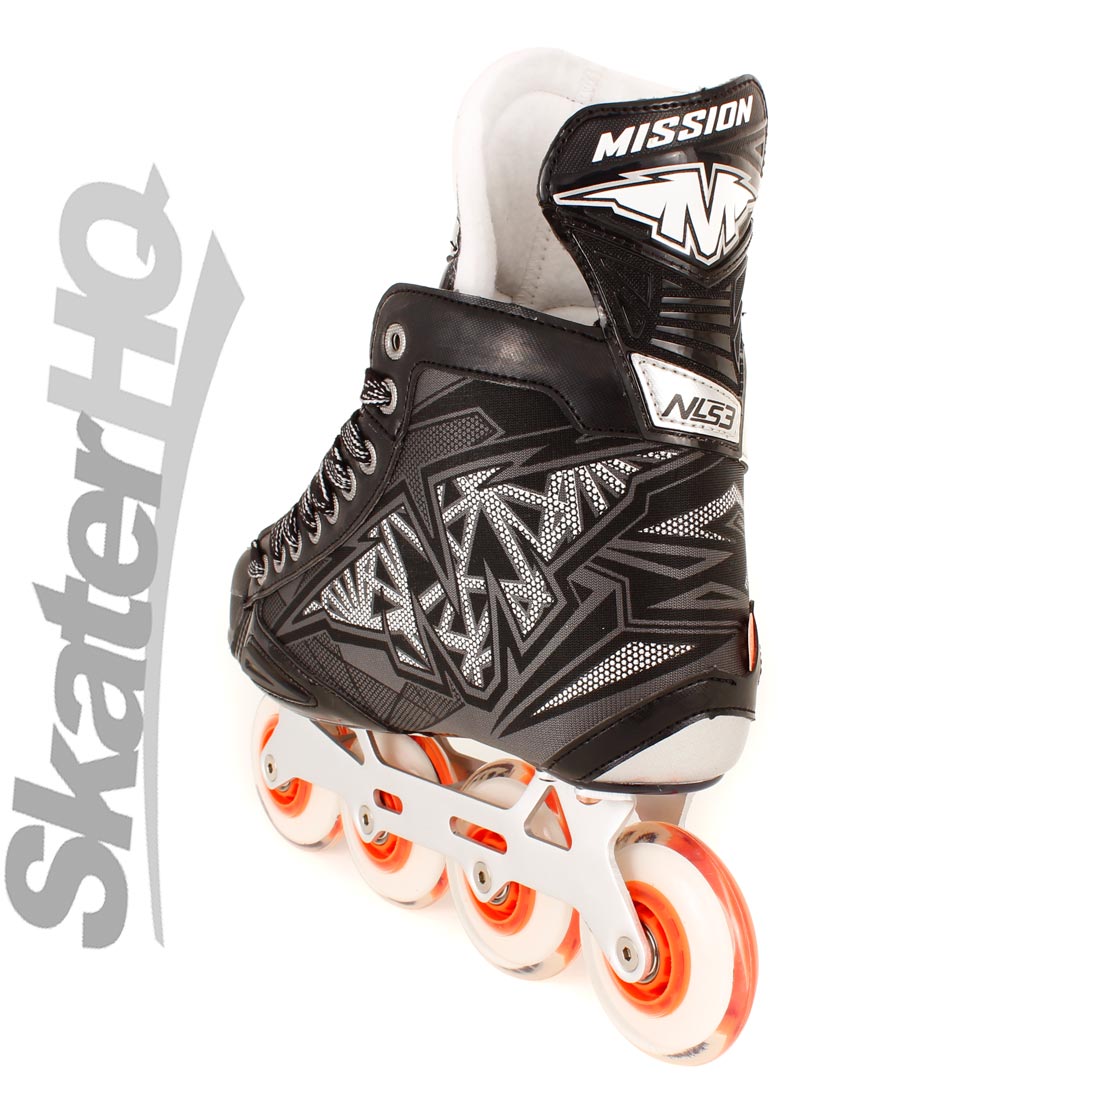 Mission Inhaler NLS3 Skate - 10US Inline Hockey Skates